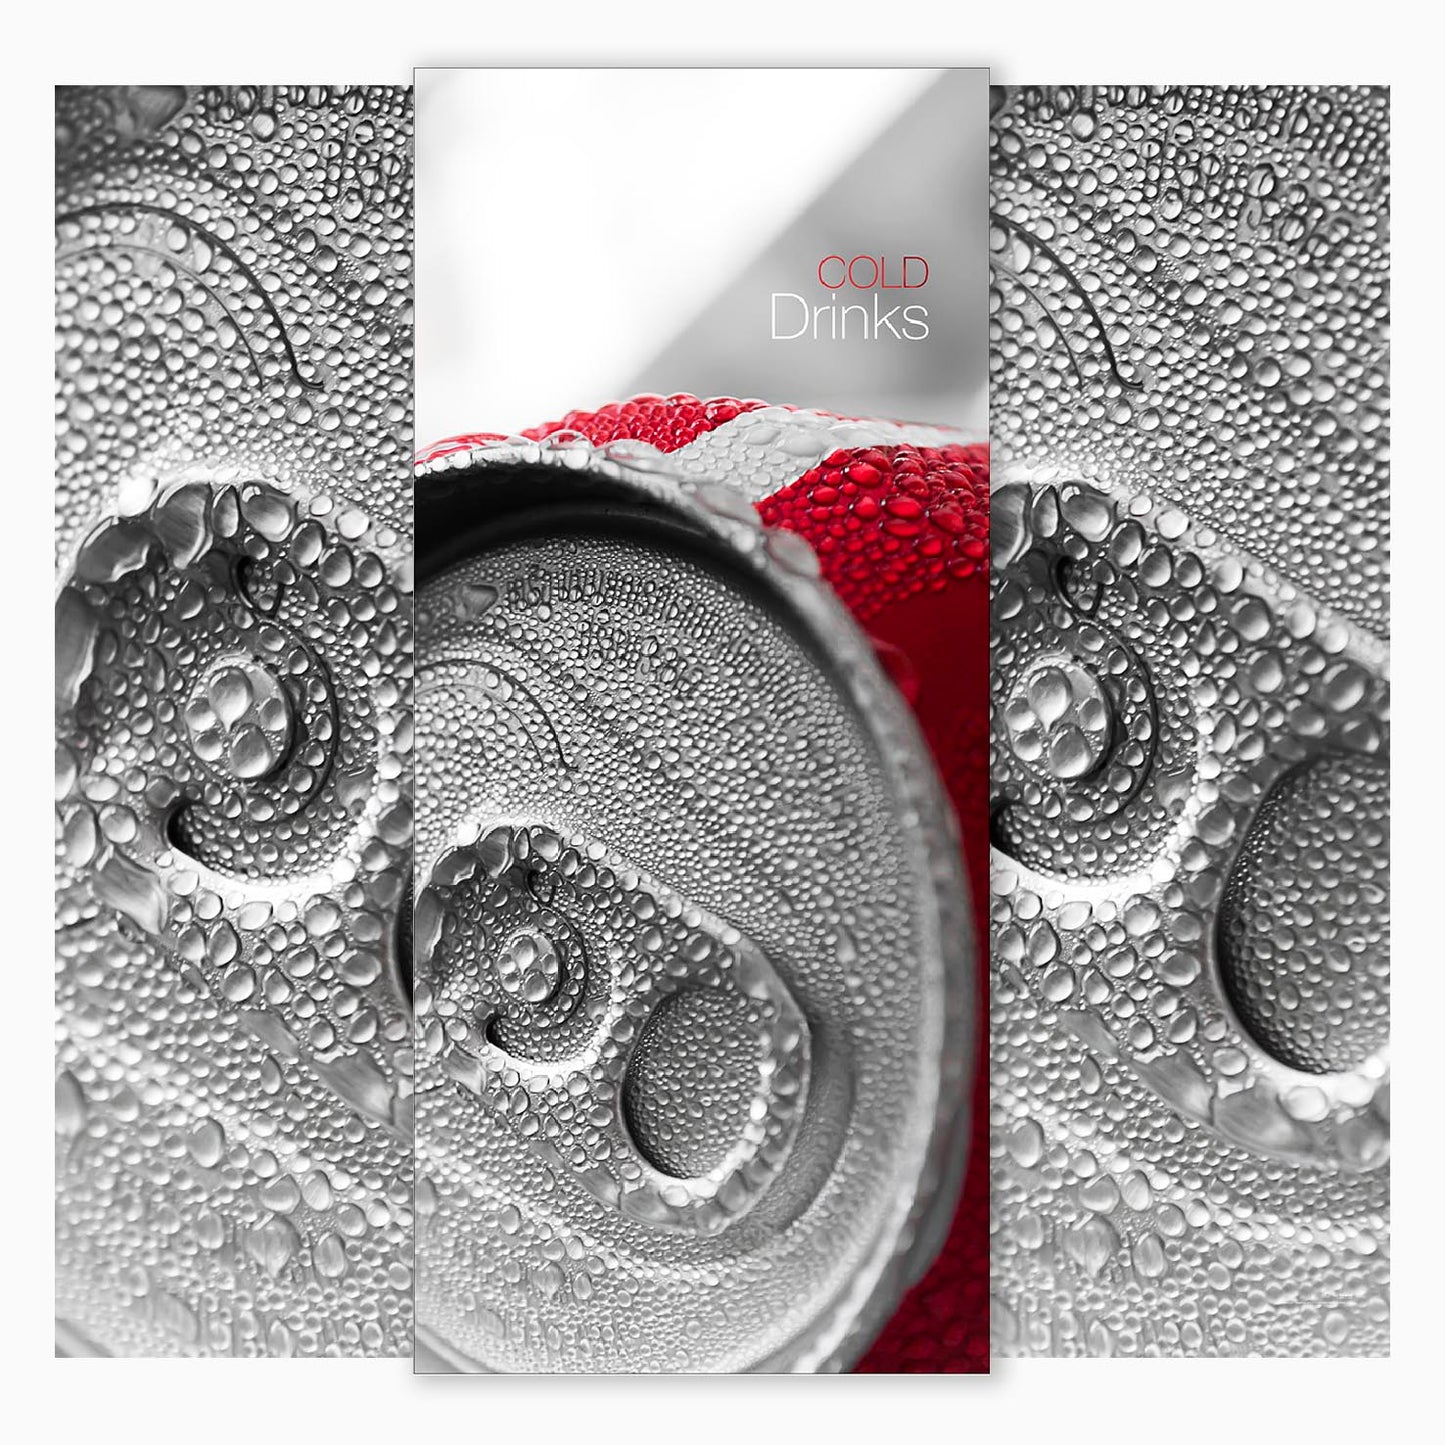 Kit Completo "Red Coke" Genérico para máquinas de refrescos